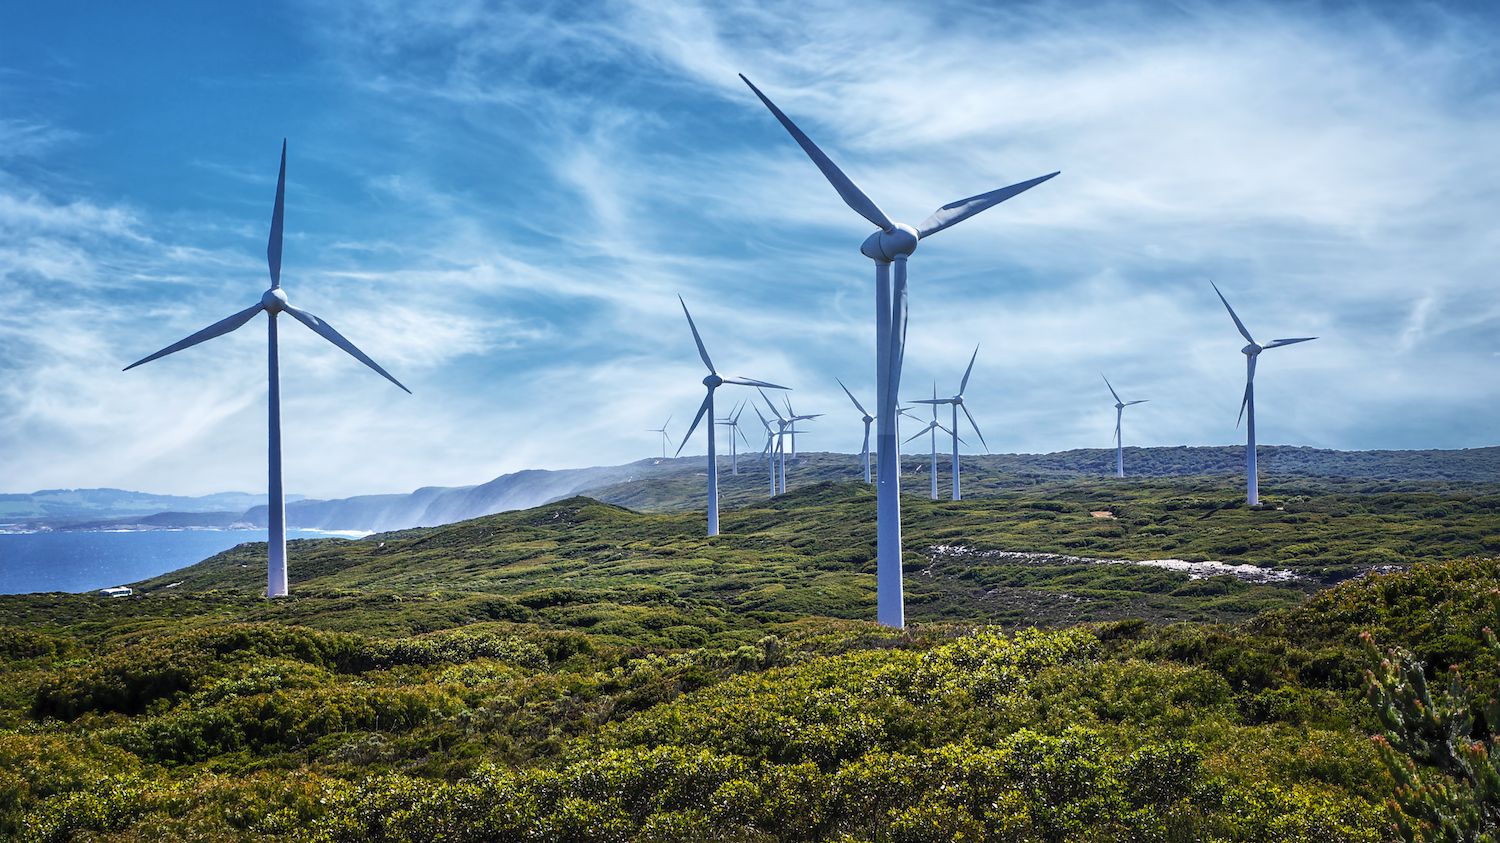 How to Build a Wind Power Farm